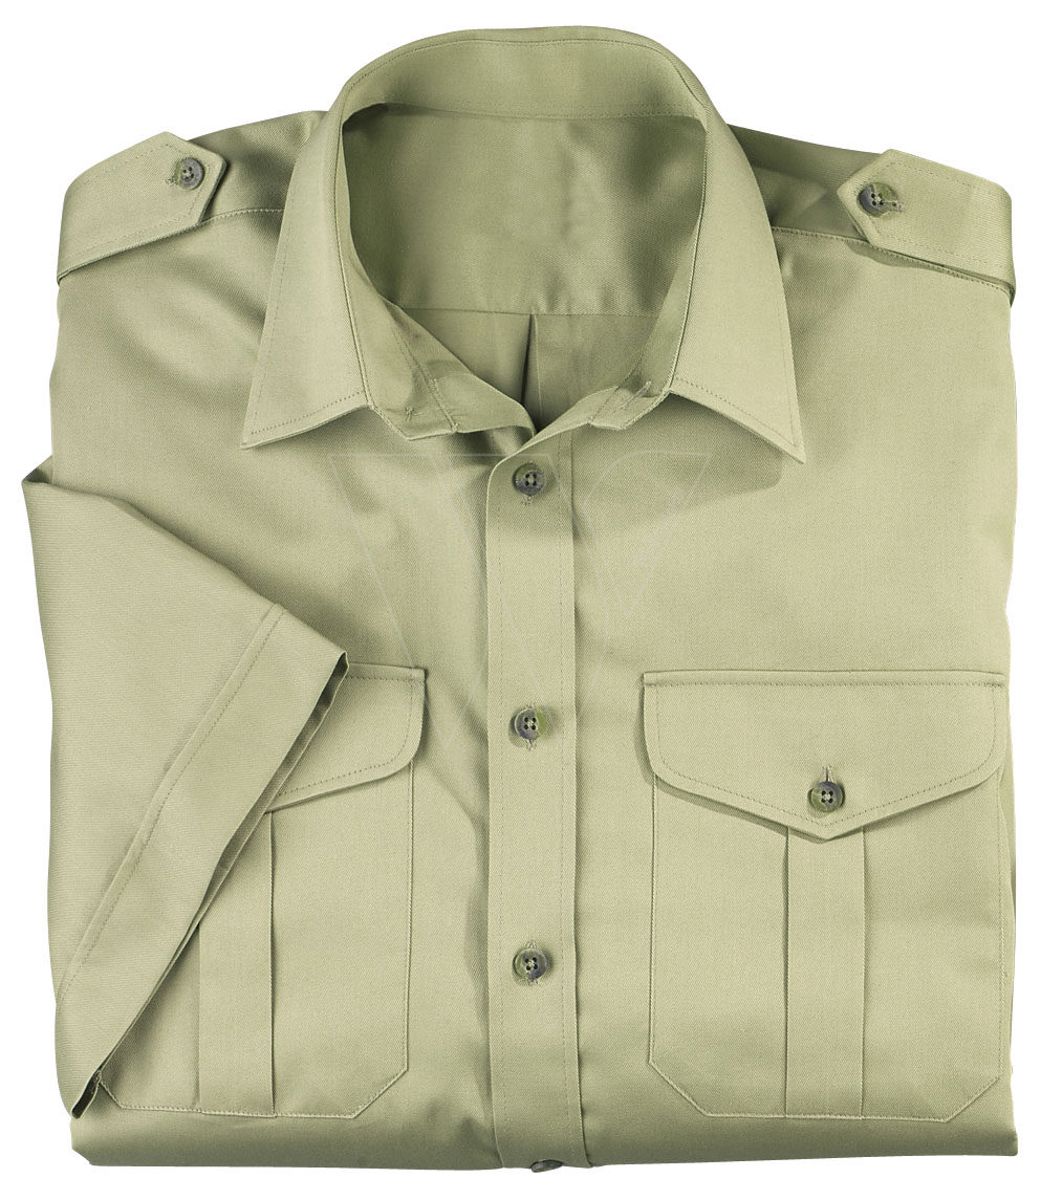 Skogen service shirt short sleeve - 40